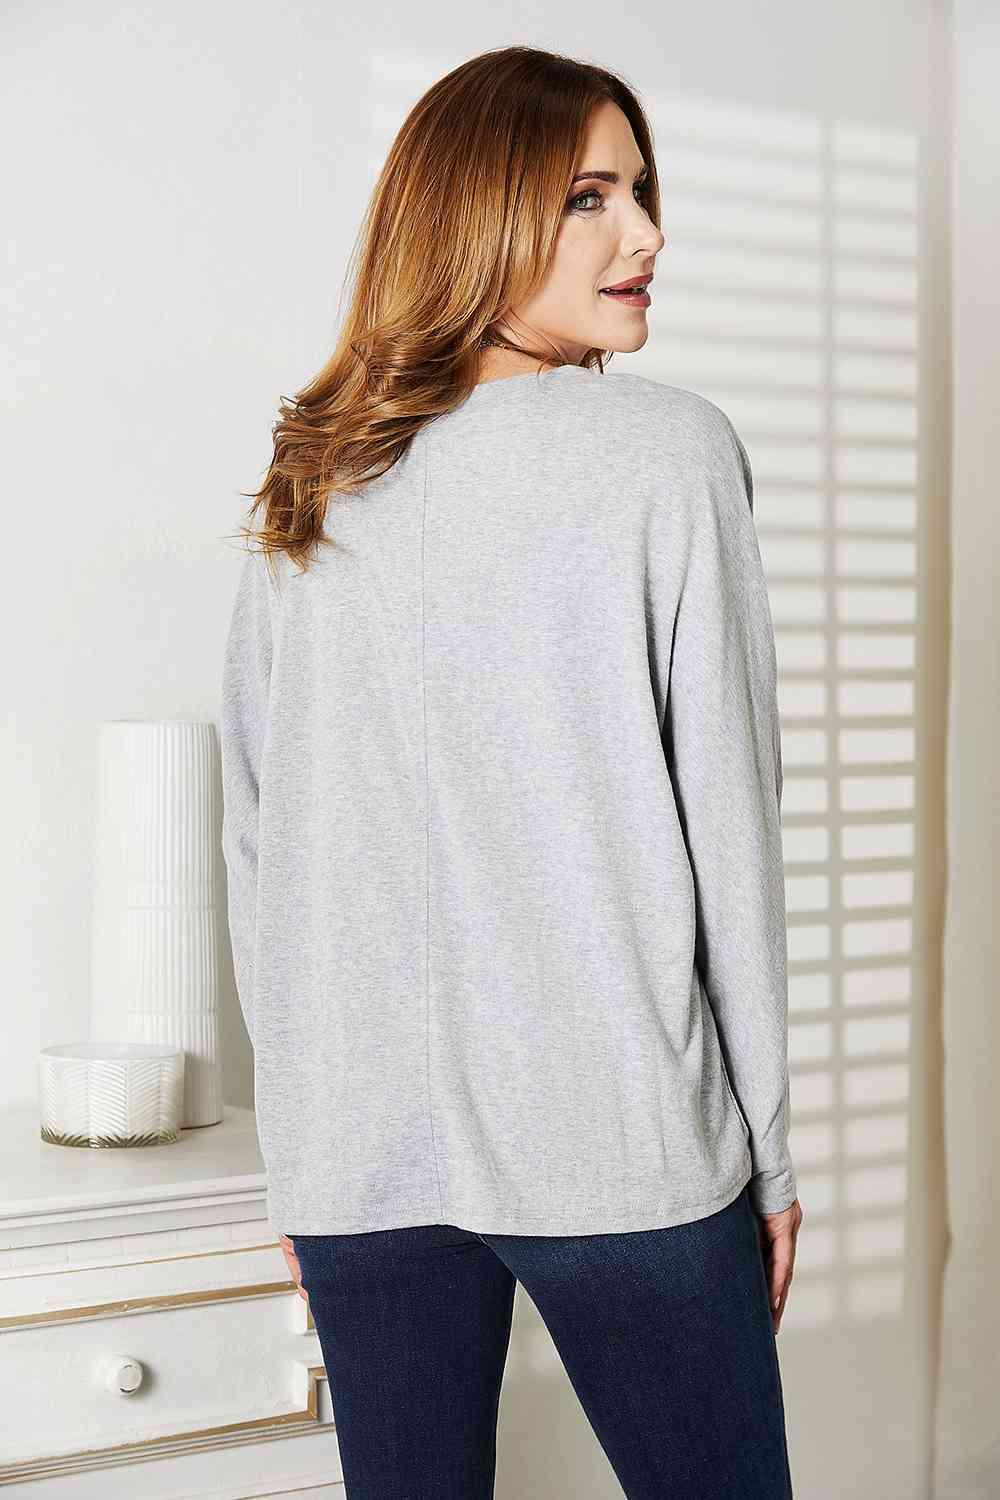 Women's Shirts Double Take Seam Detail Round Neck Long Sleeve Top